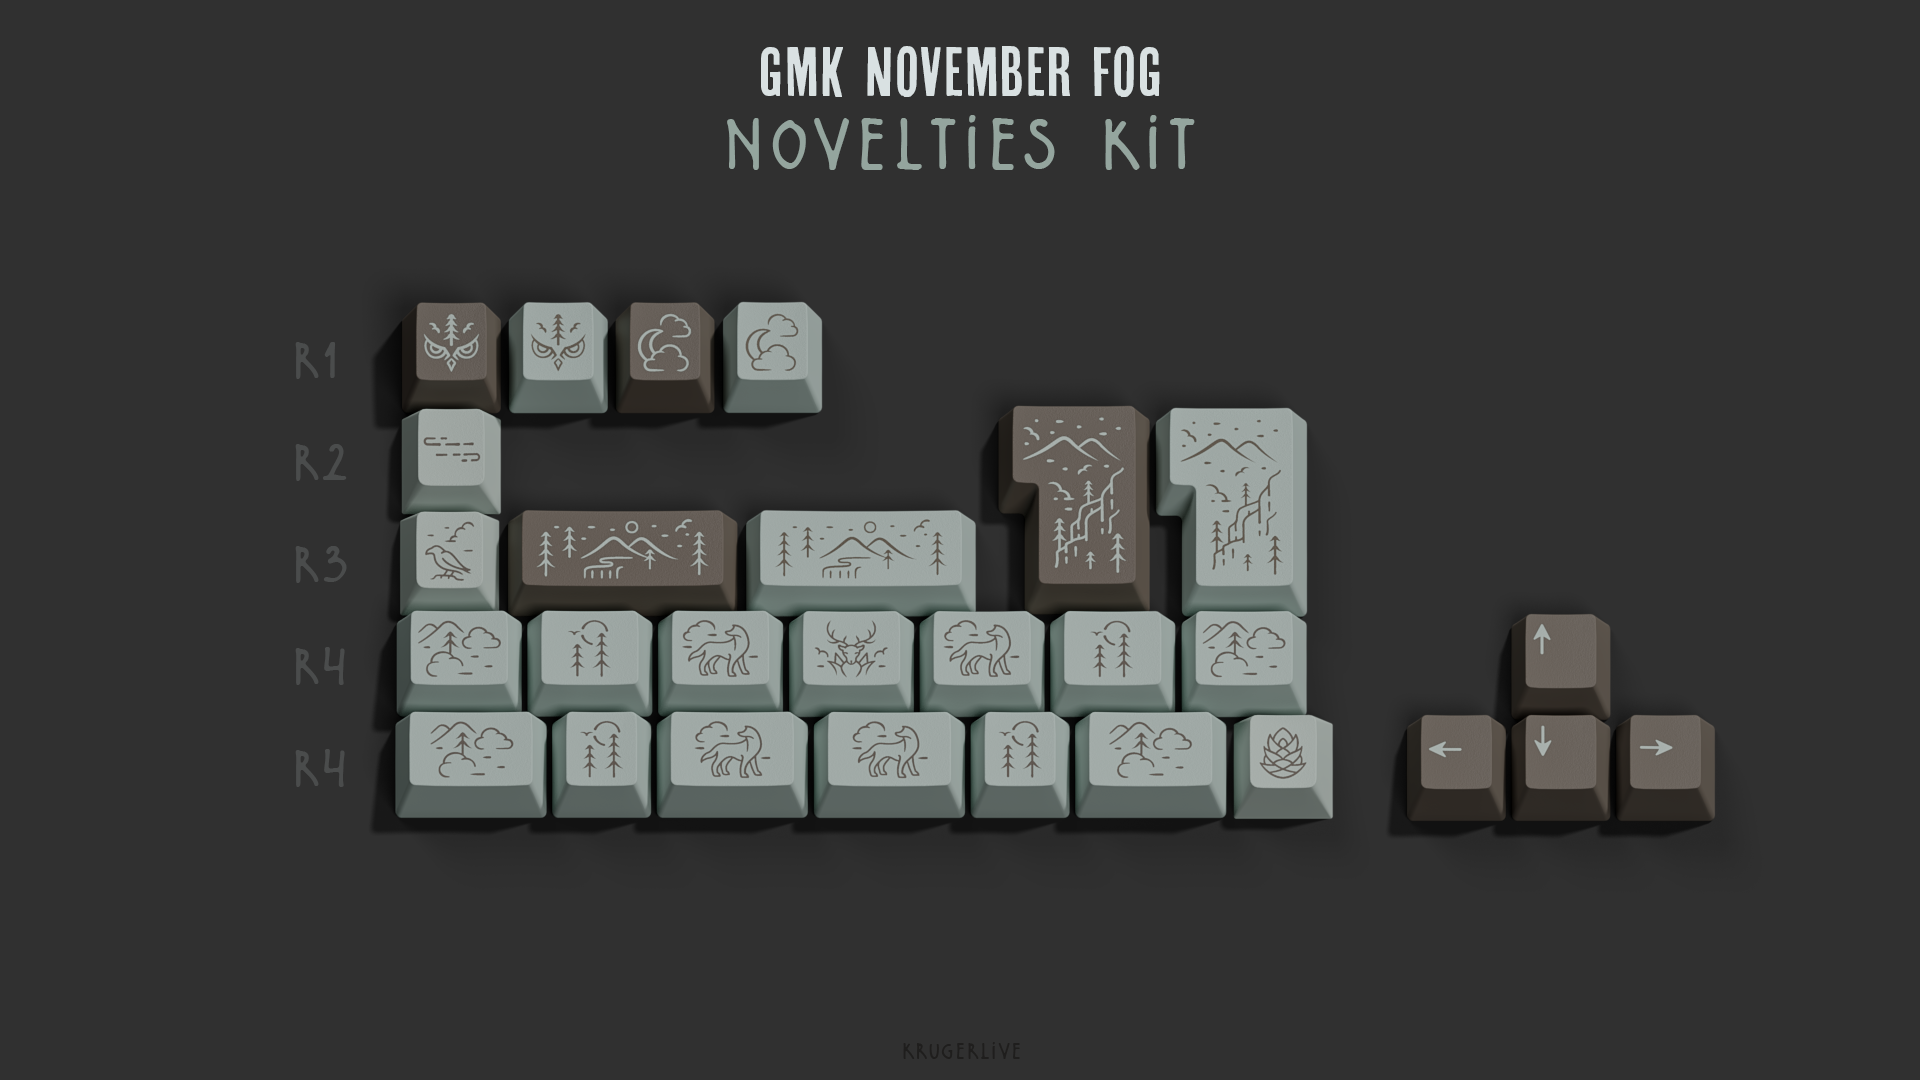 [Group Buy] GMK November Fog